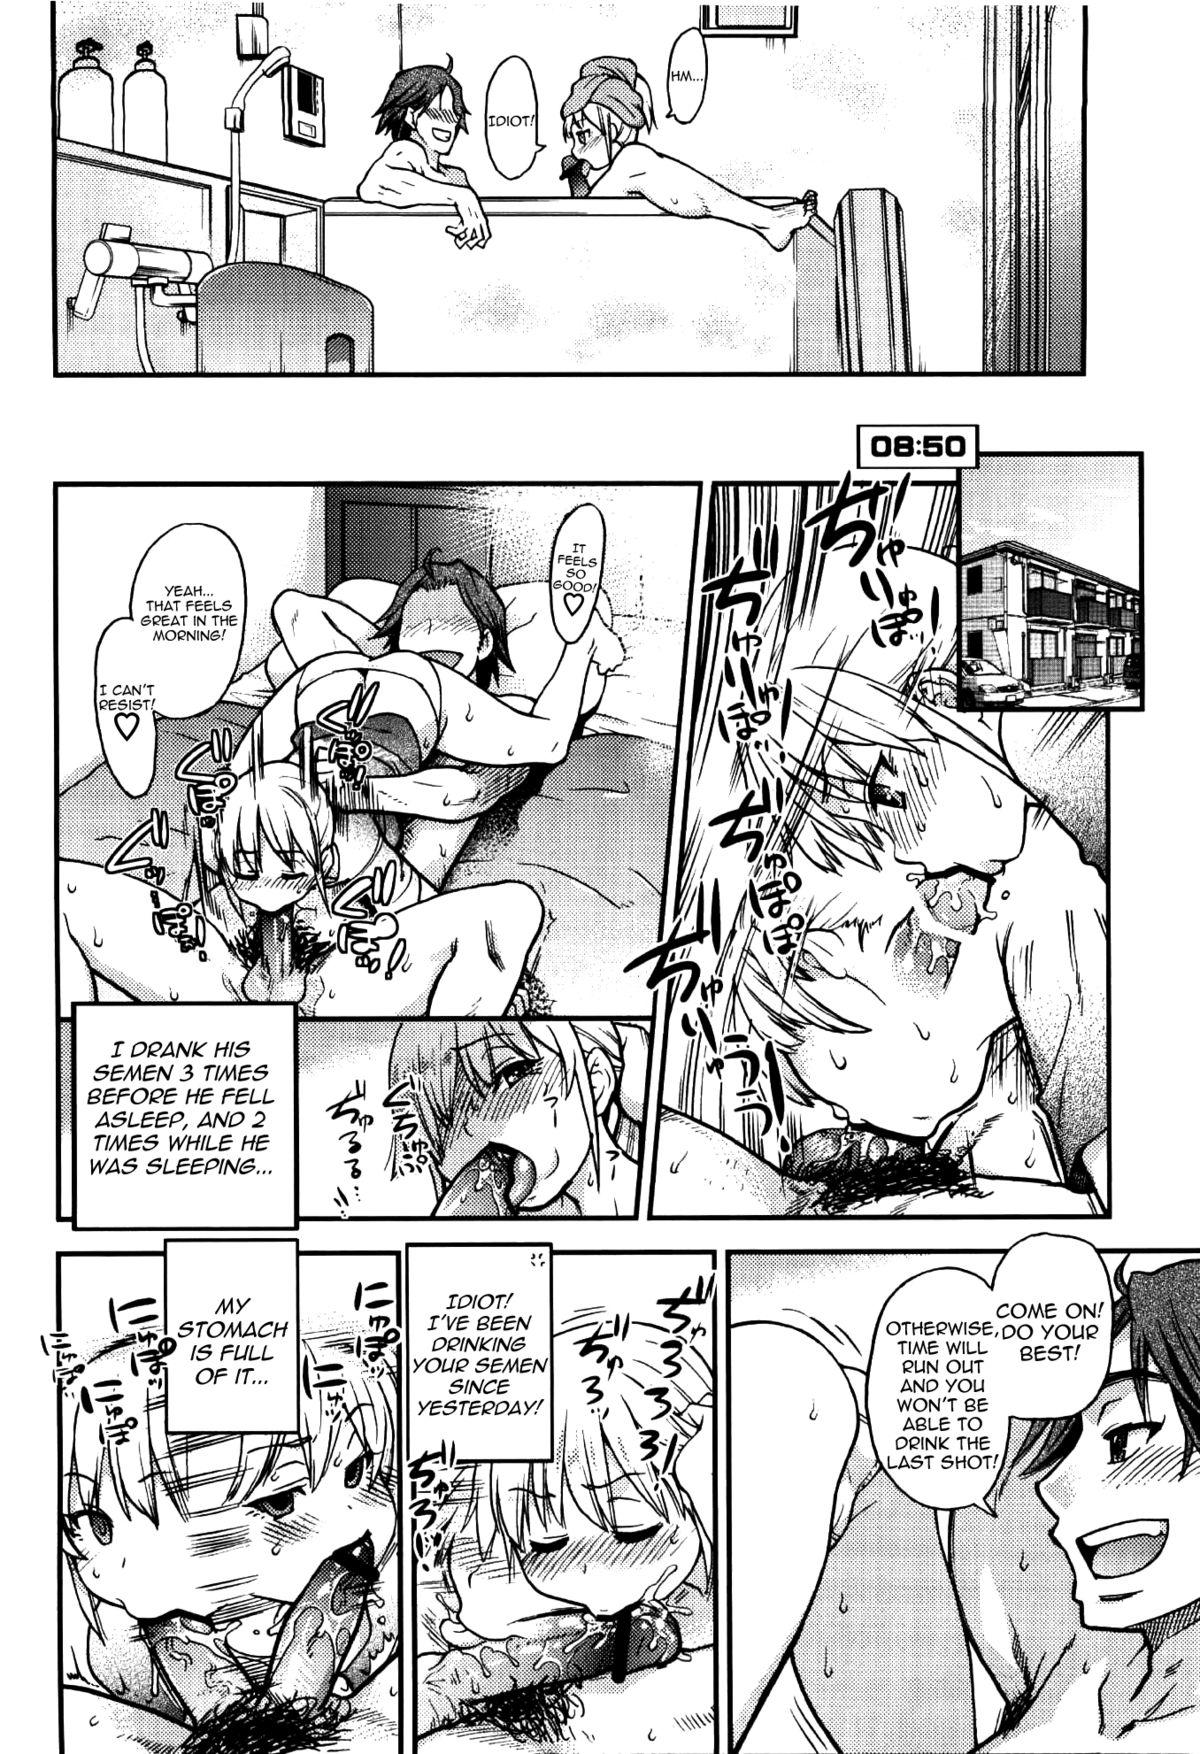 Doggystyle Chupachari Blows - Page 8